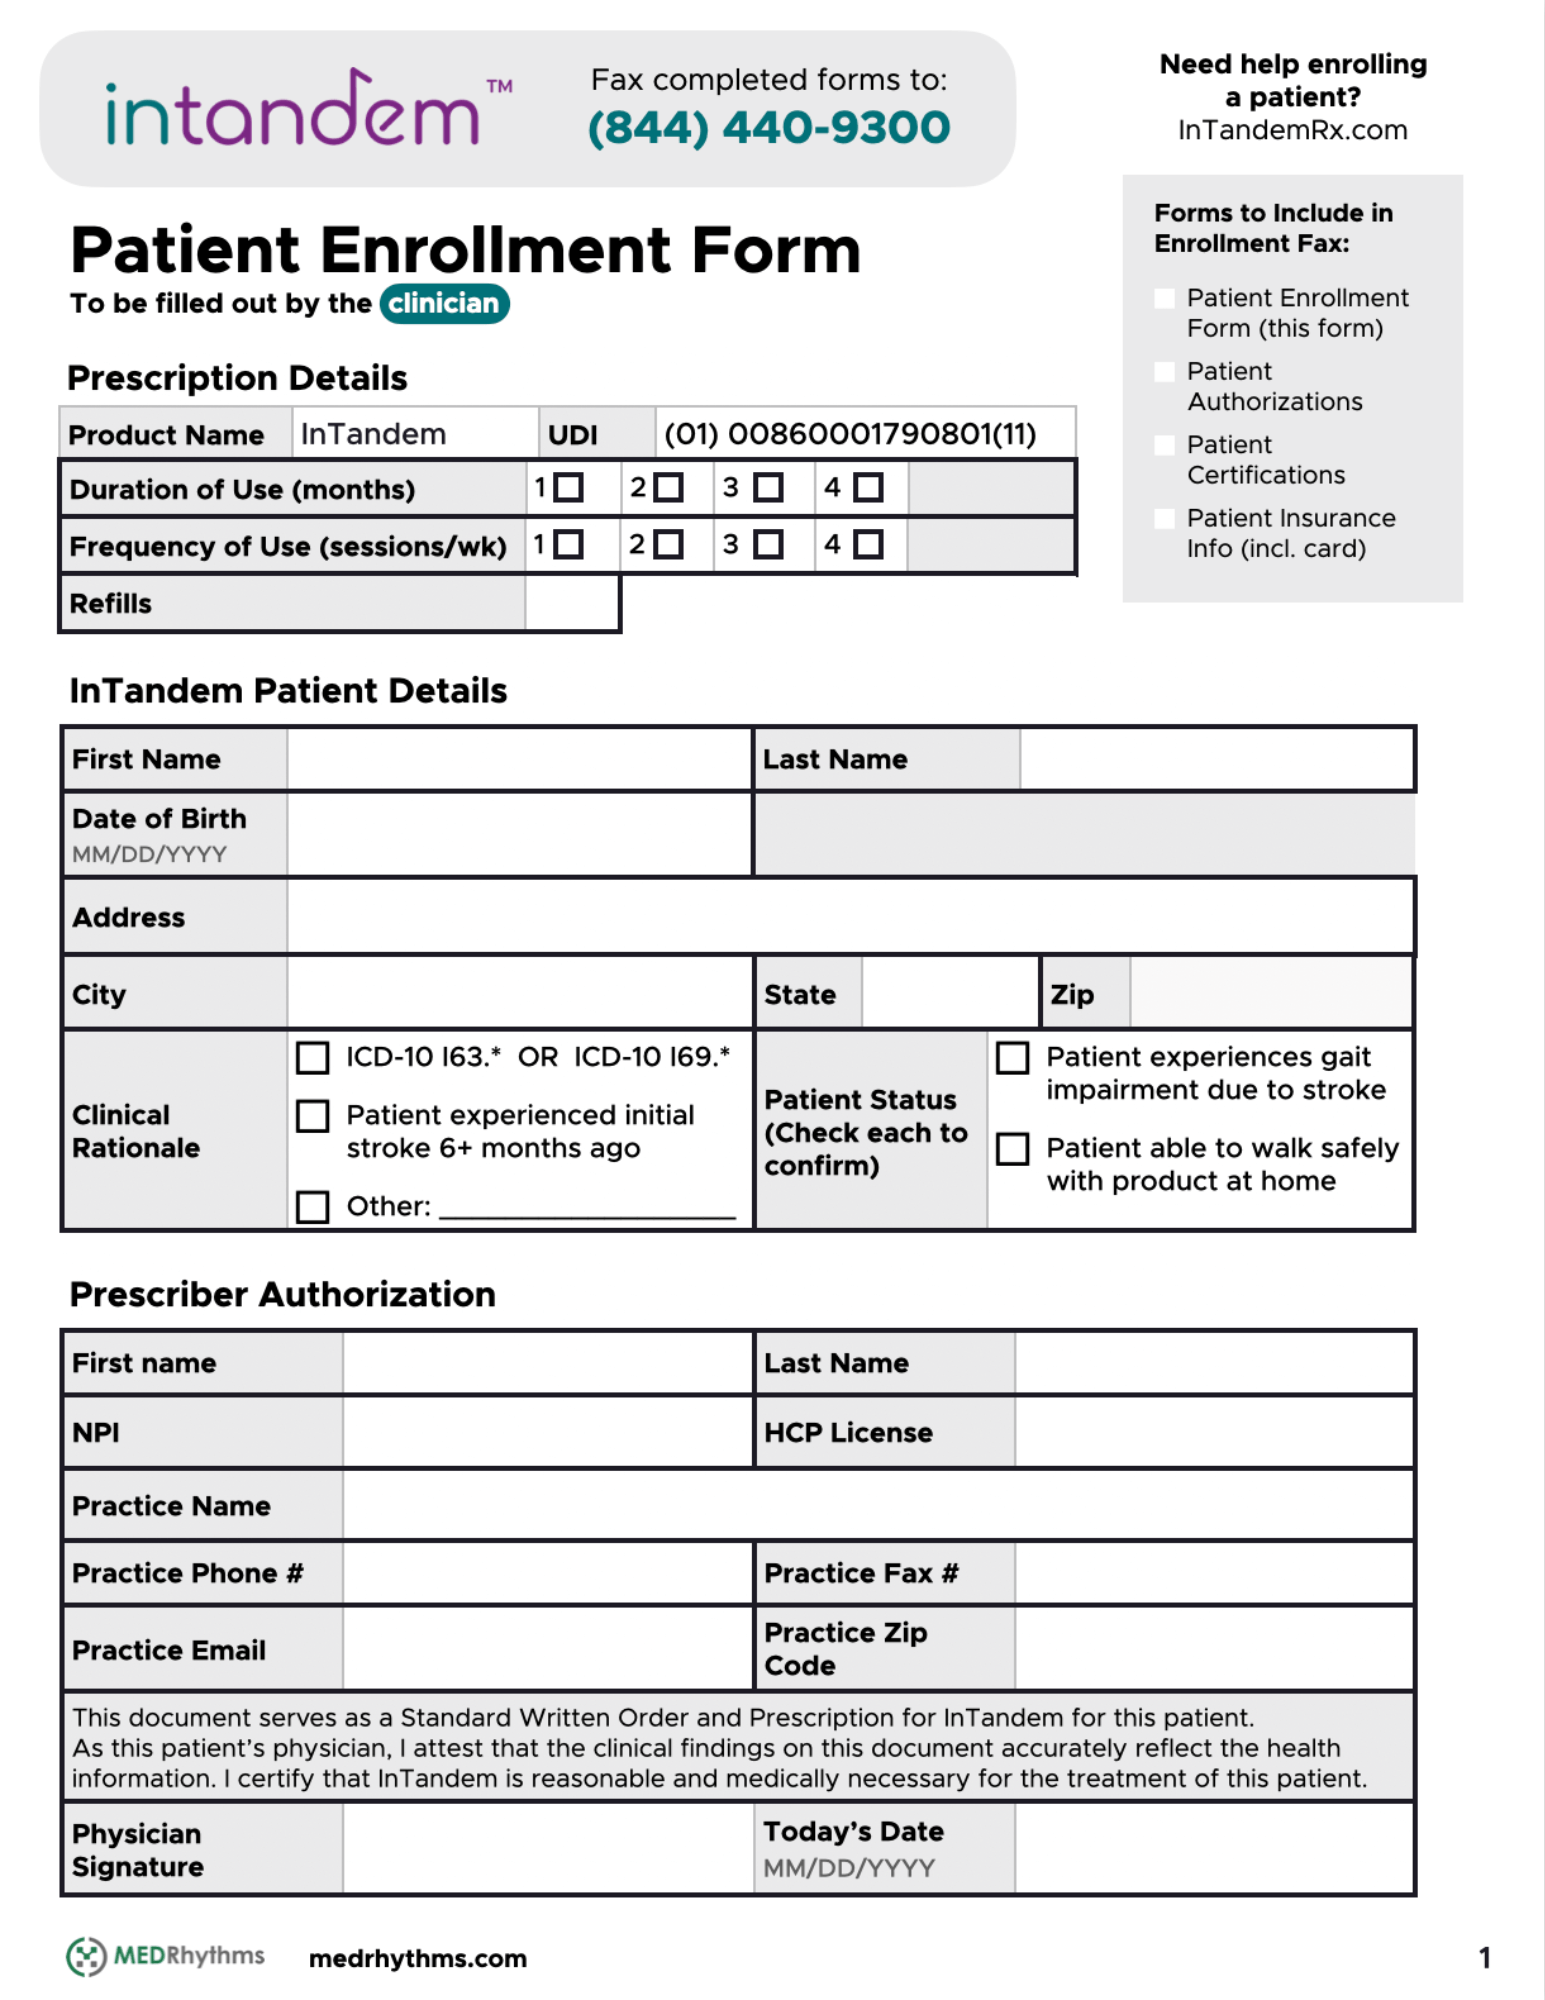 A link to the full InTandem Program Enrollment Form